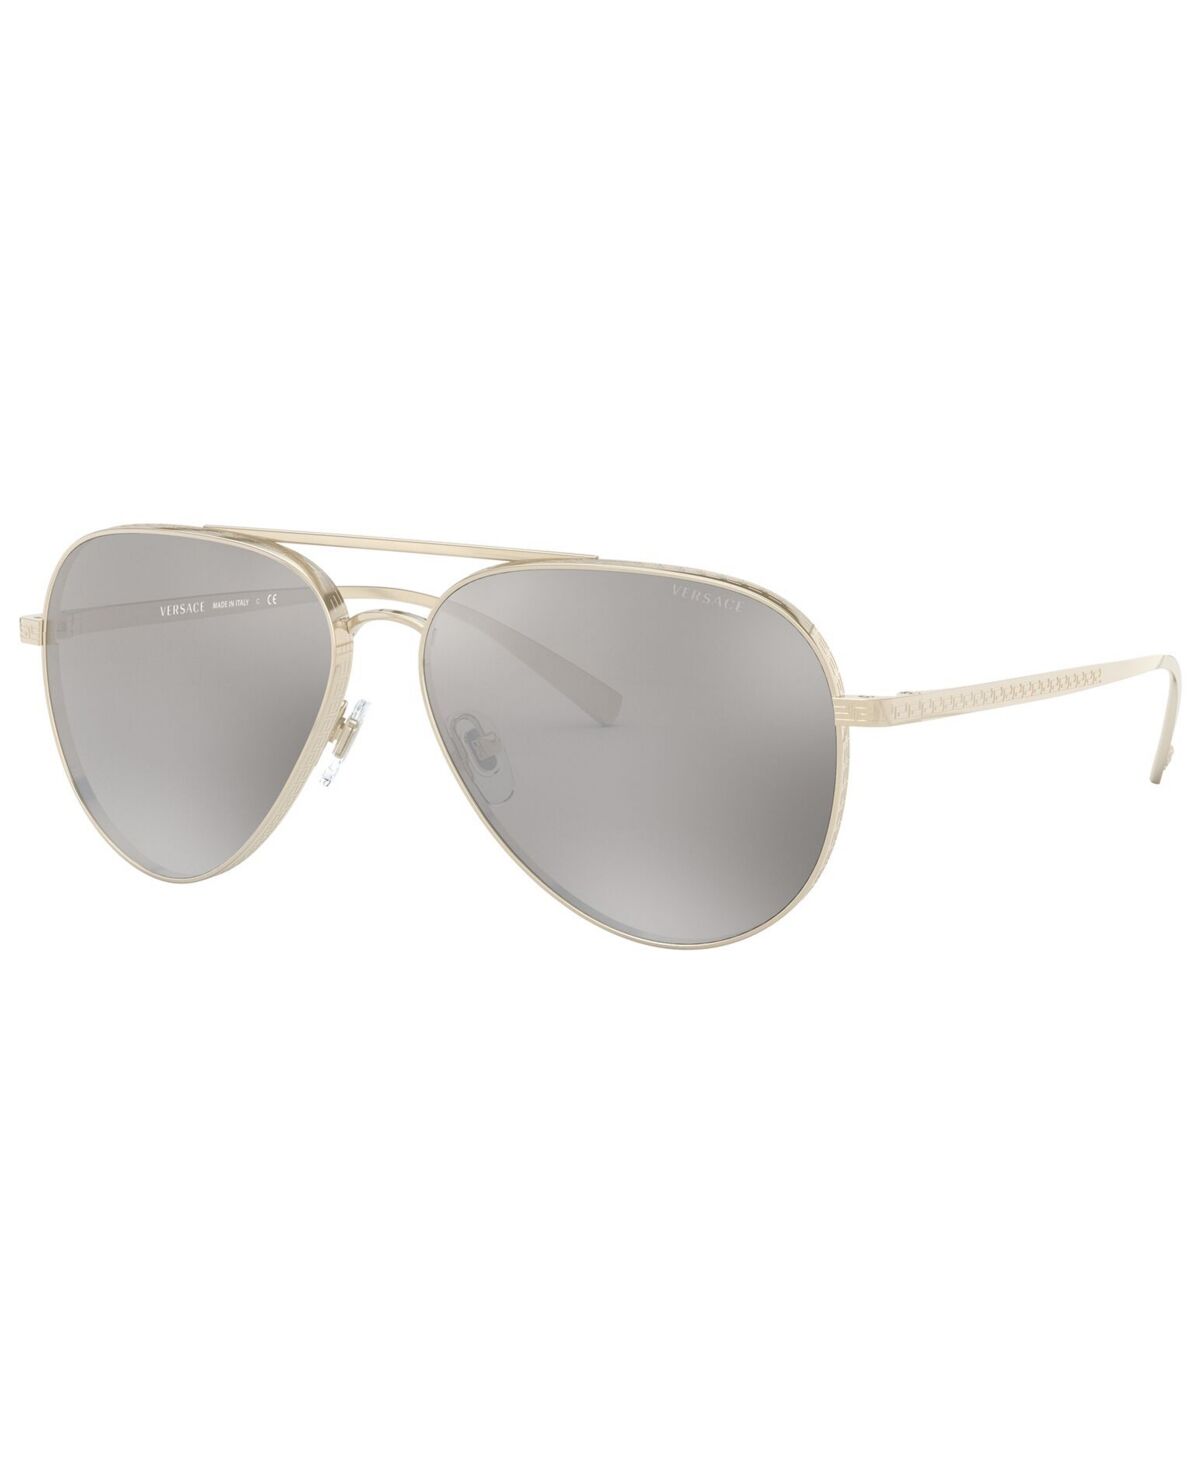 Versace Sunglasses, VE2217 59 - PALE GOLD/LIGHT GREY MIRROR SILVER